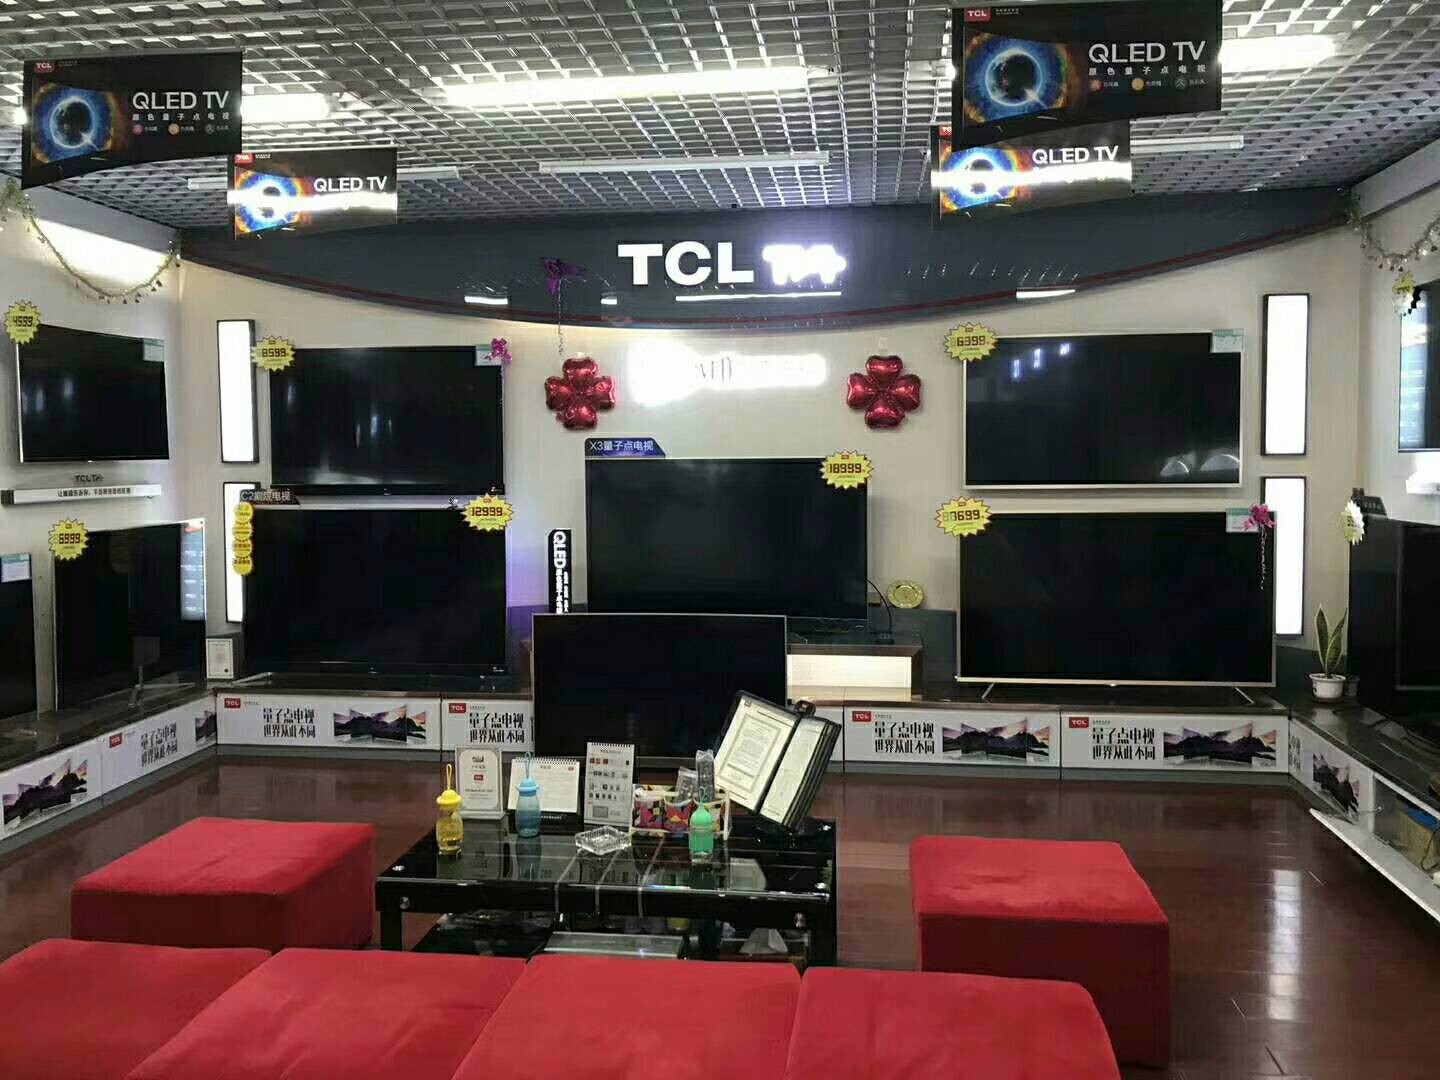 TCL旗舰店